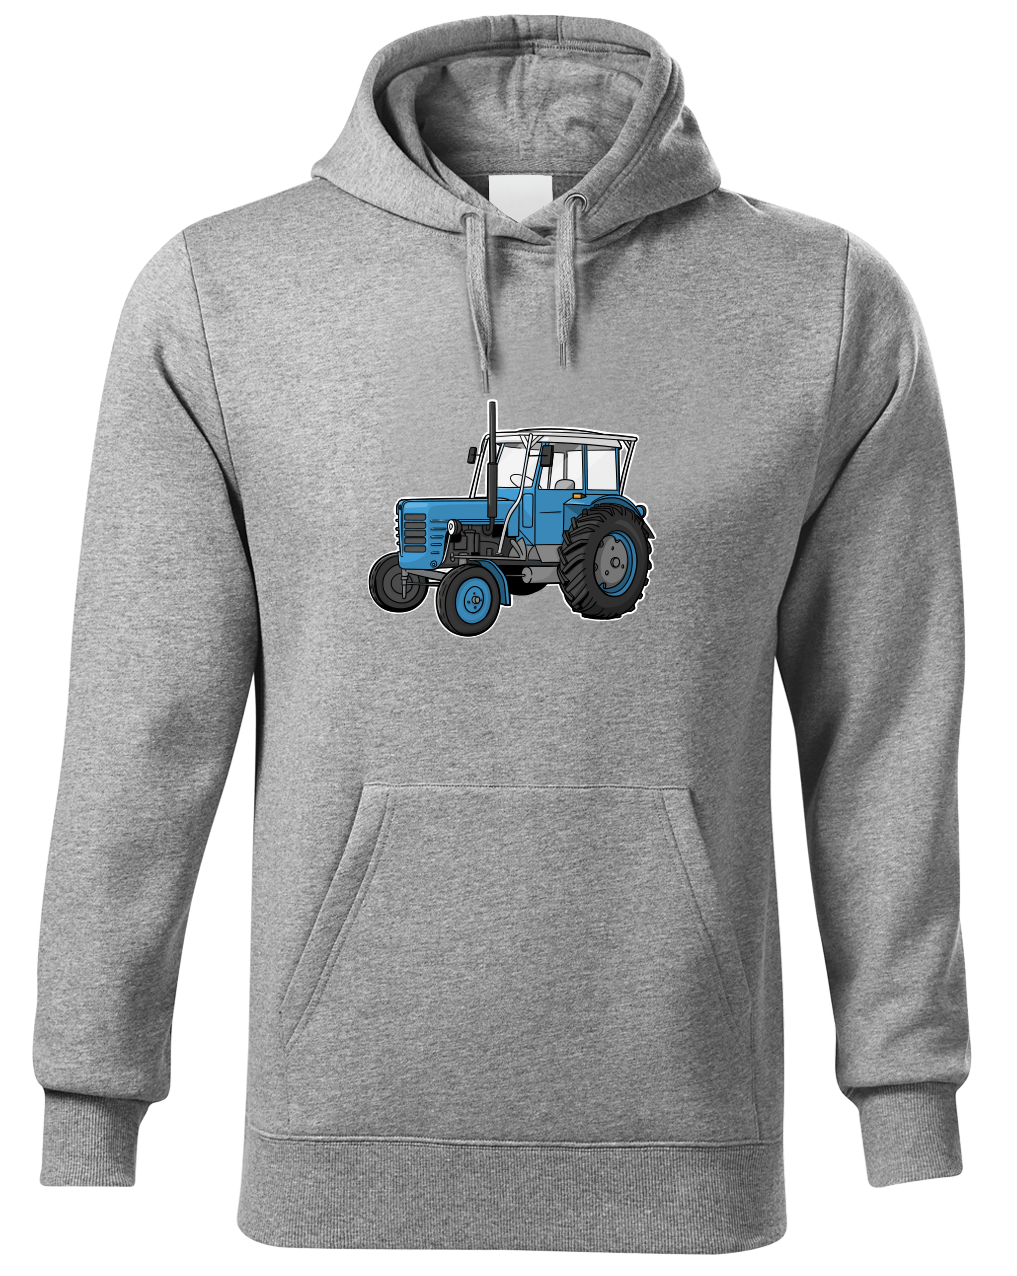 Mikina s traktorem - Starý traktor Velikost: XL, Barva: Světle šedá